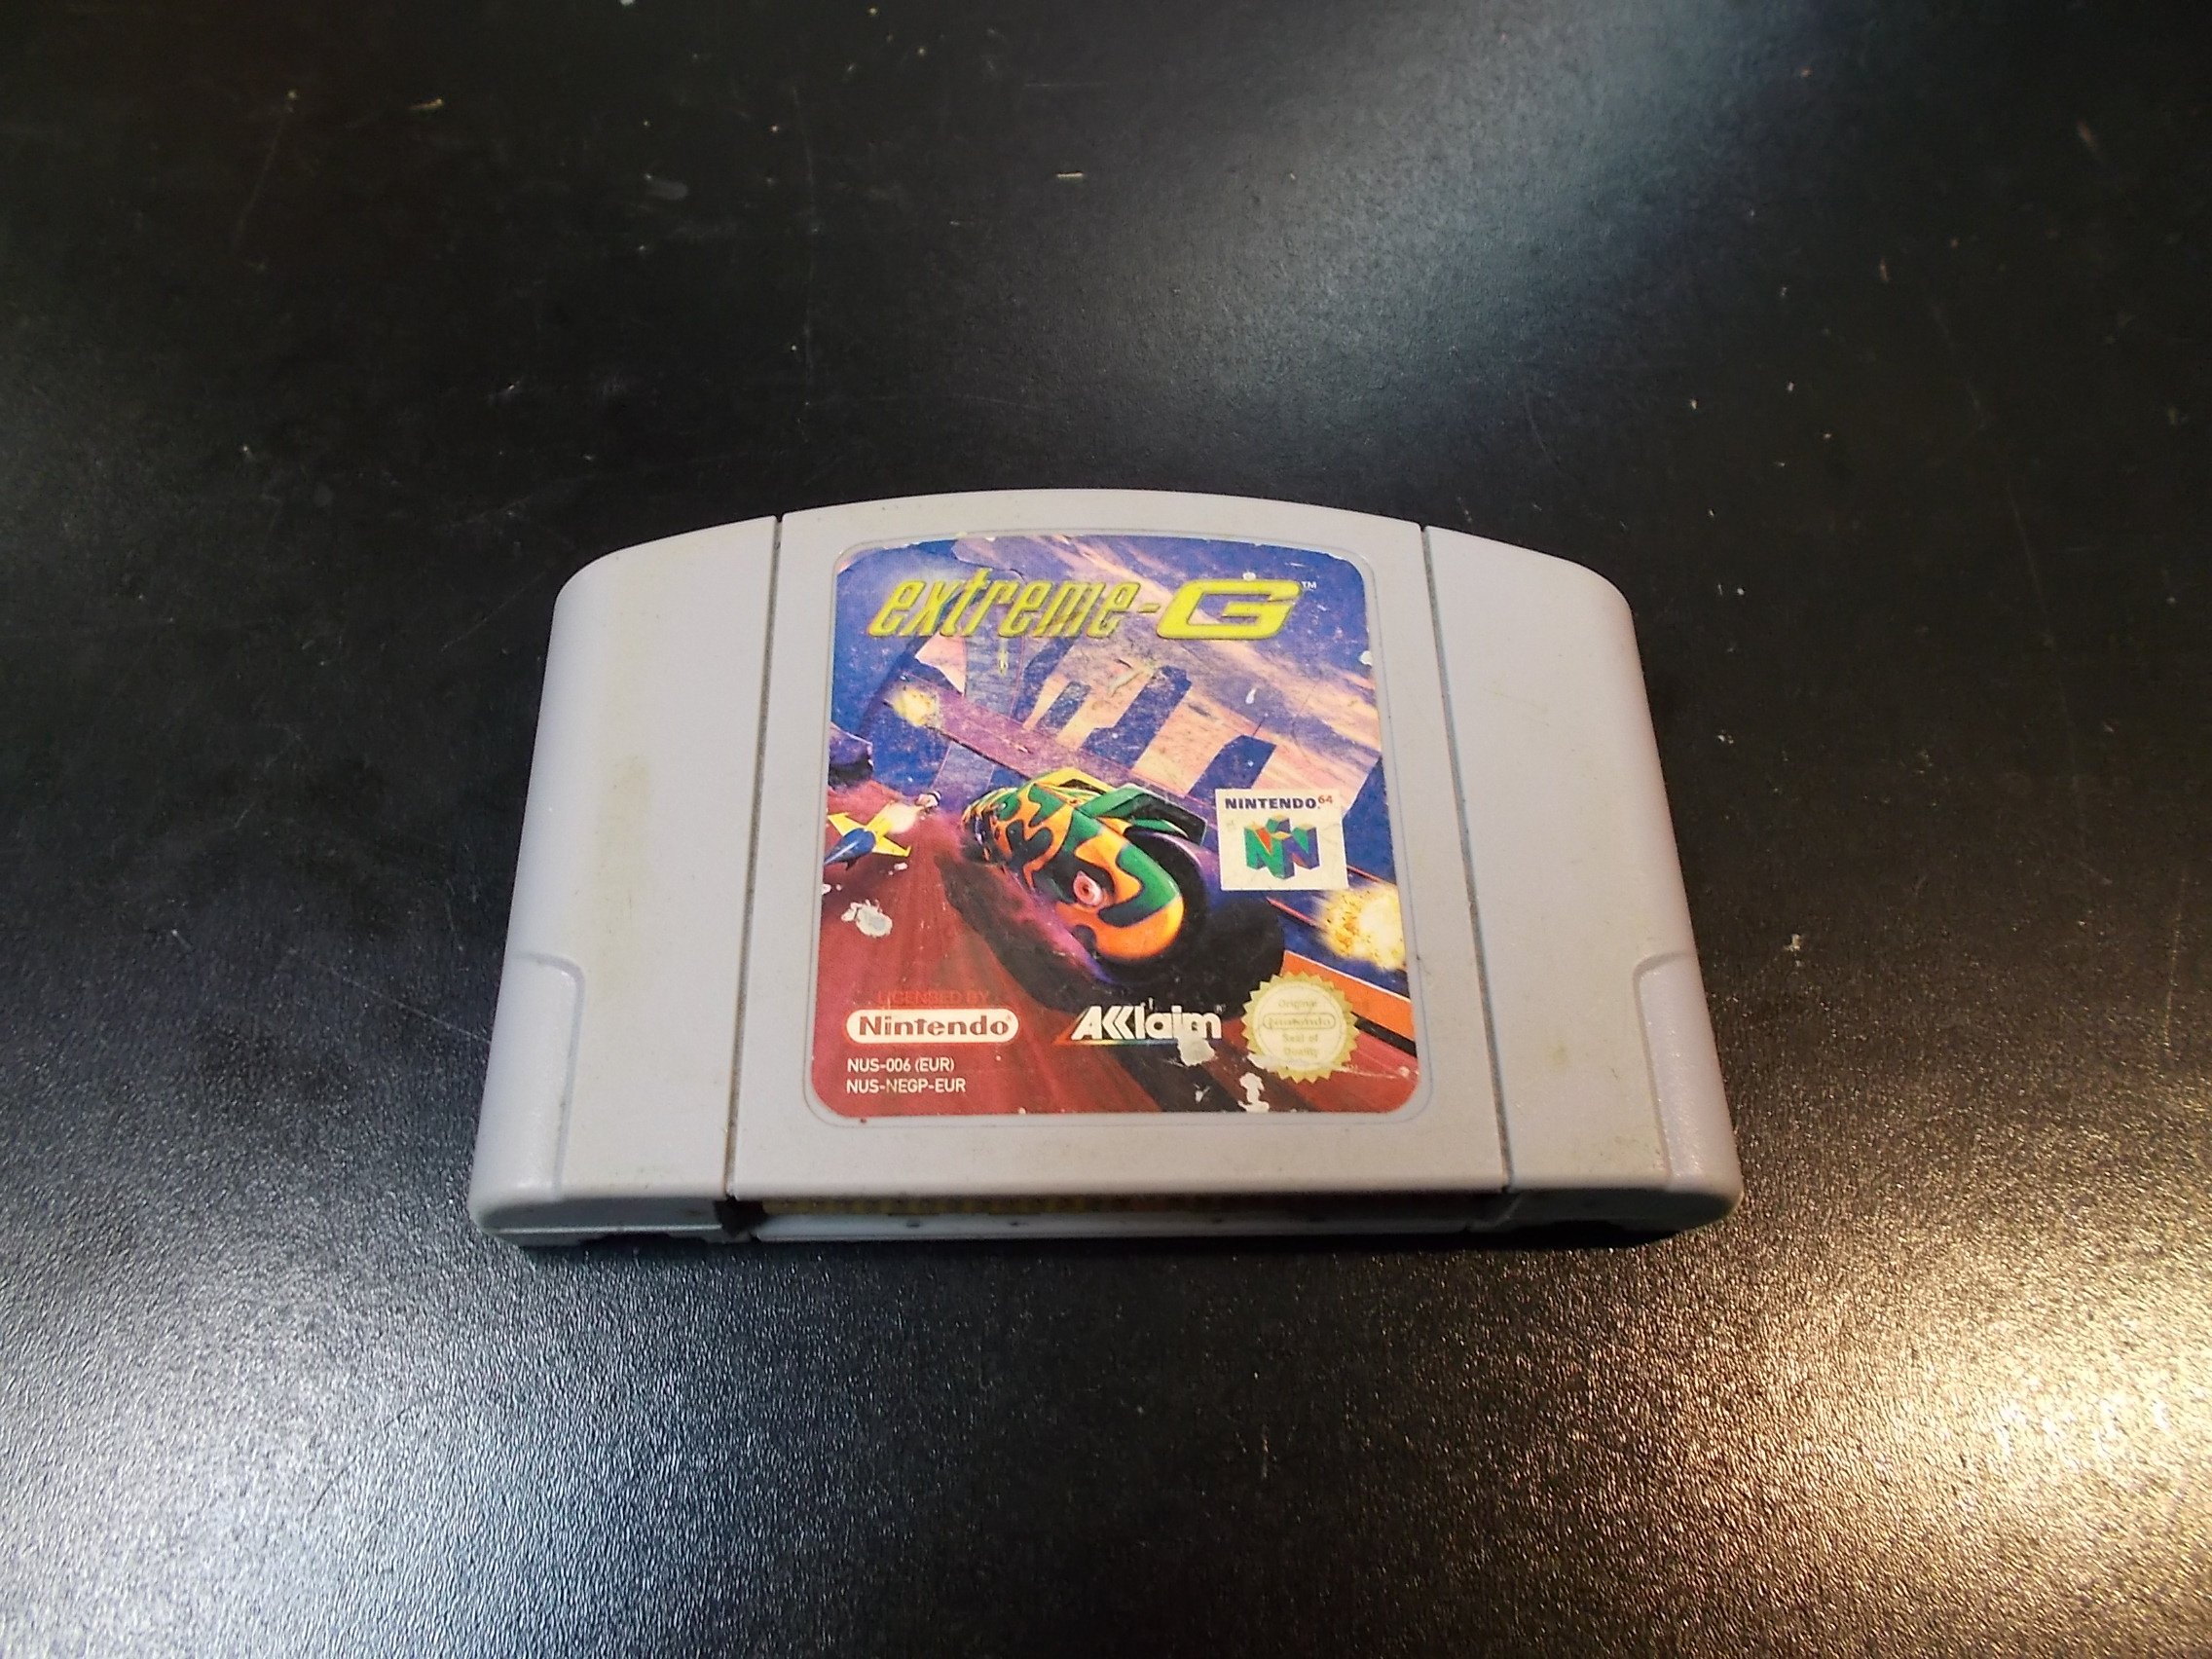 EXTREME-G - GRA Nintendo 64 0265